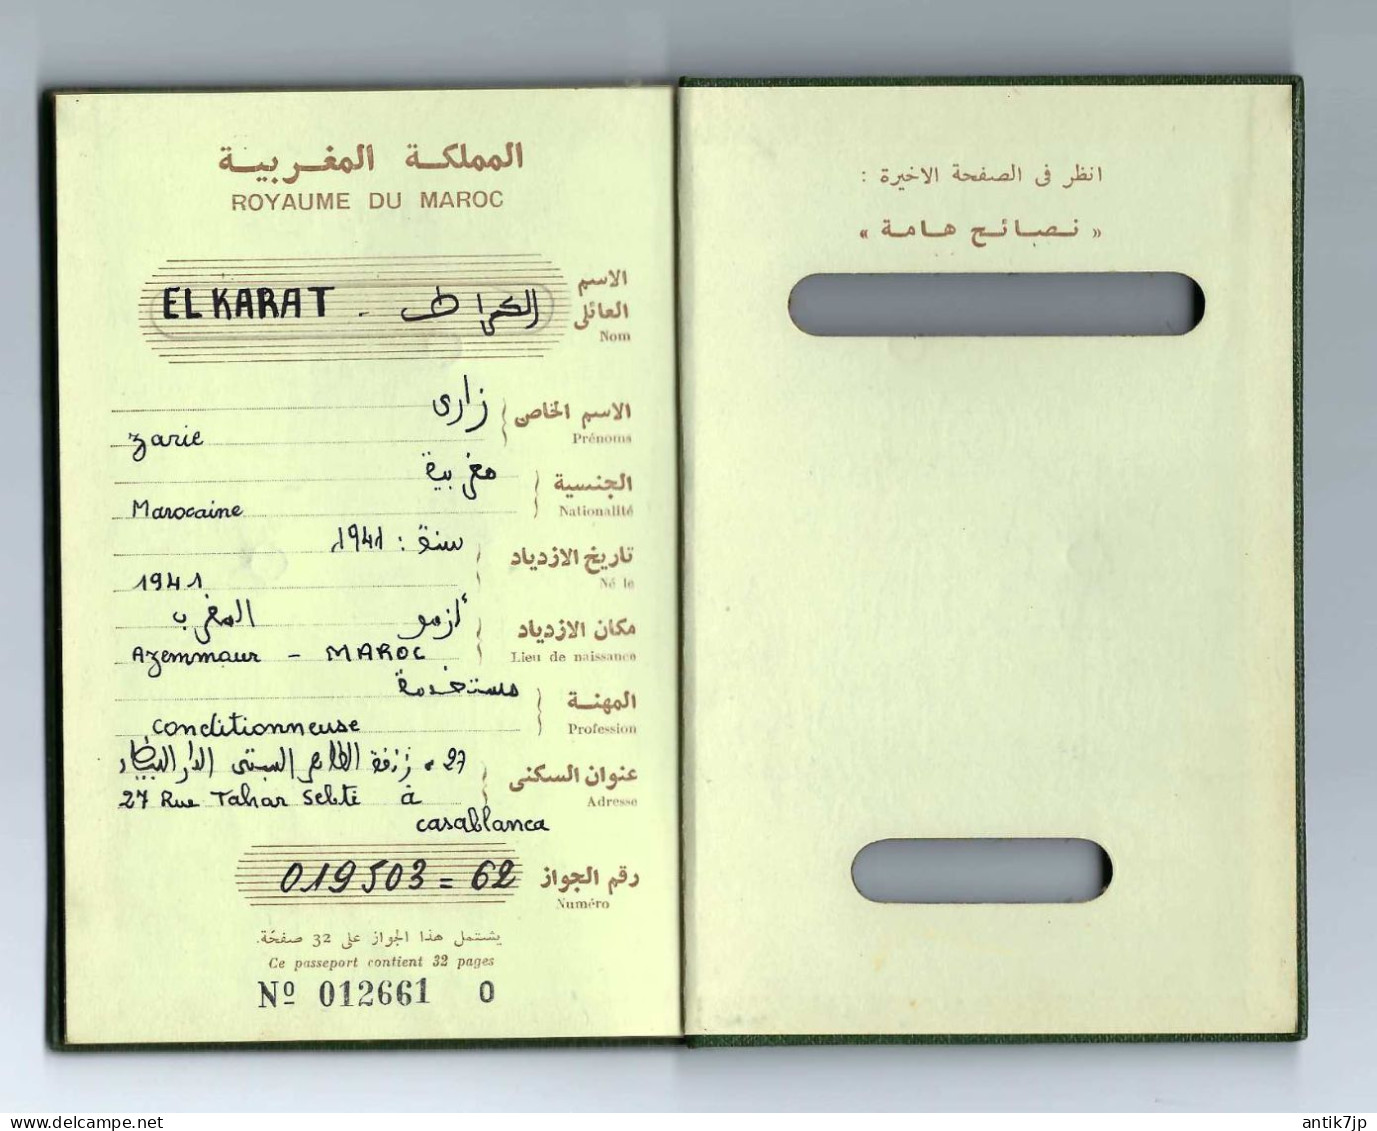 MOROCCO PASSPORT ROYAUME DU MAROC PASSEPORT VISA STAMP 1960s - Documents Historiques